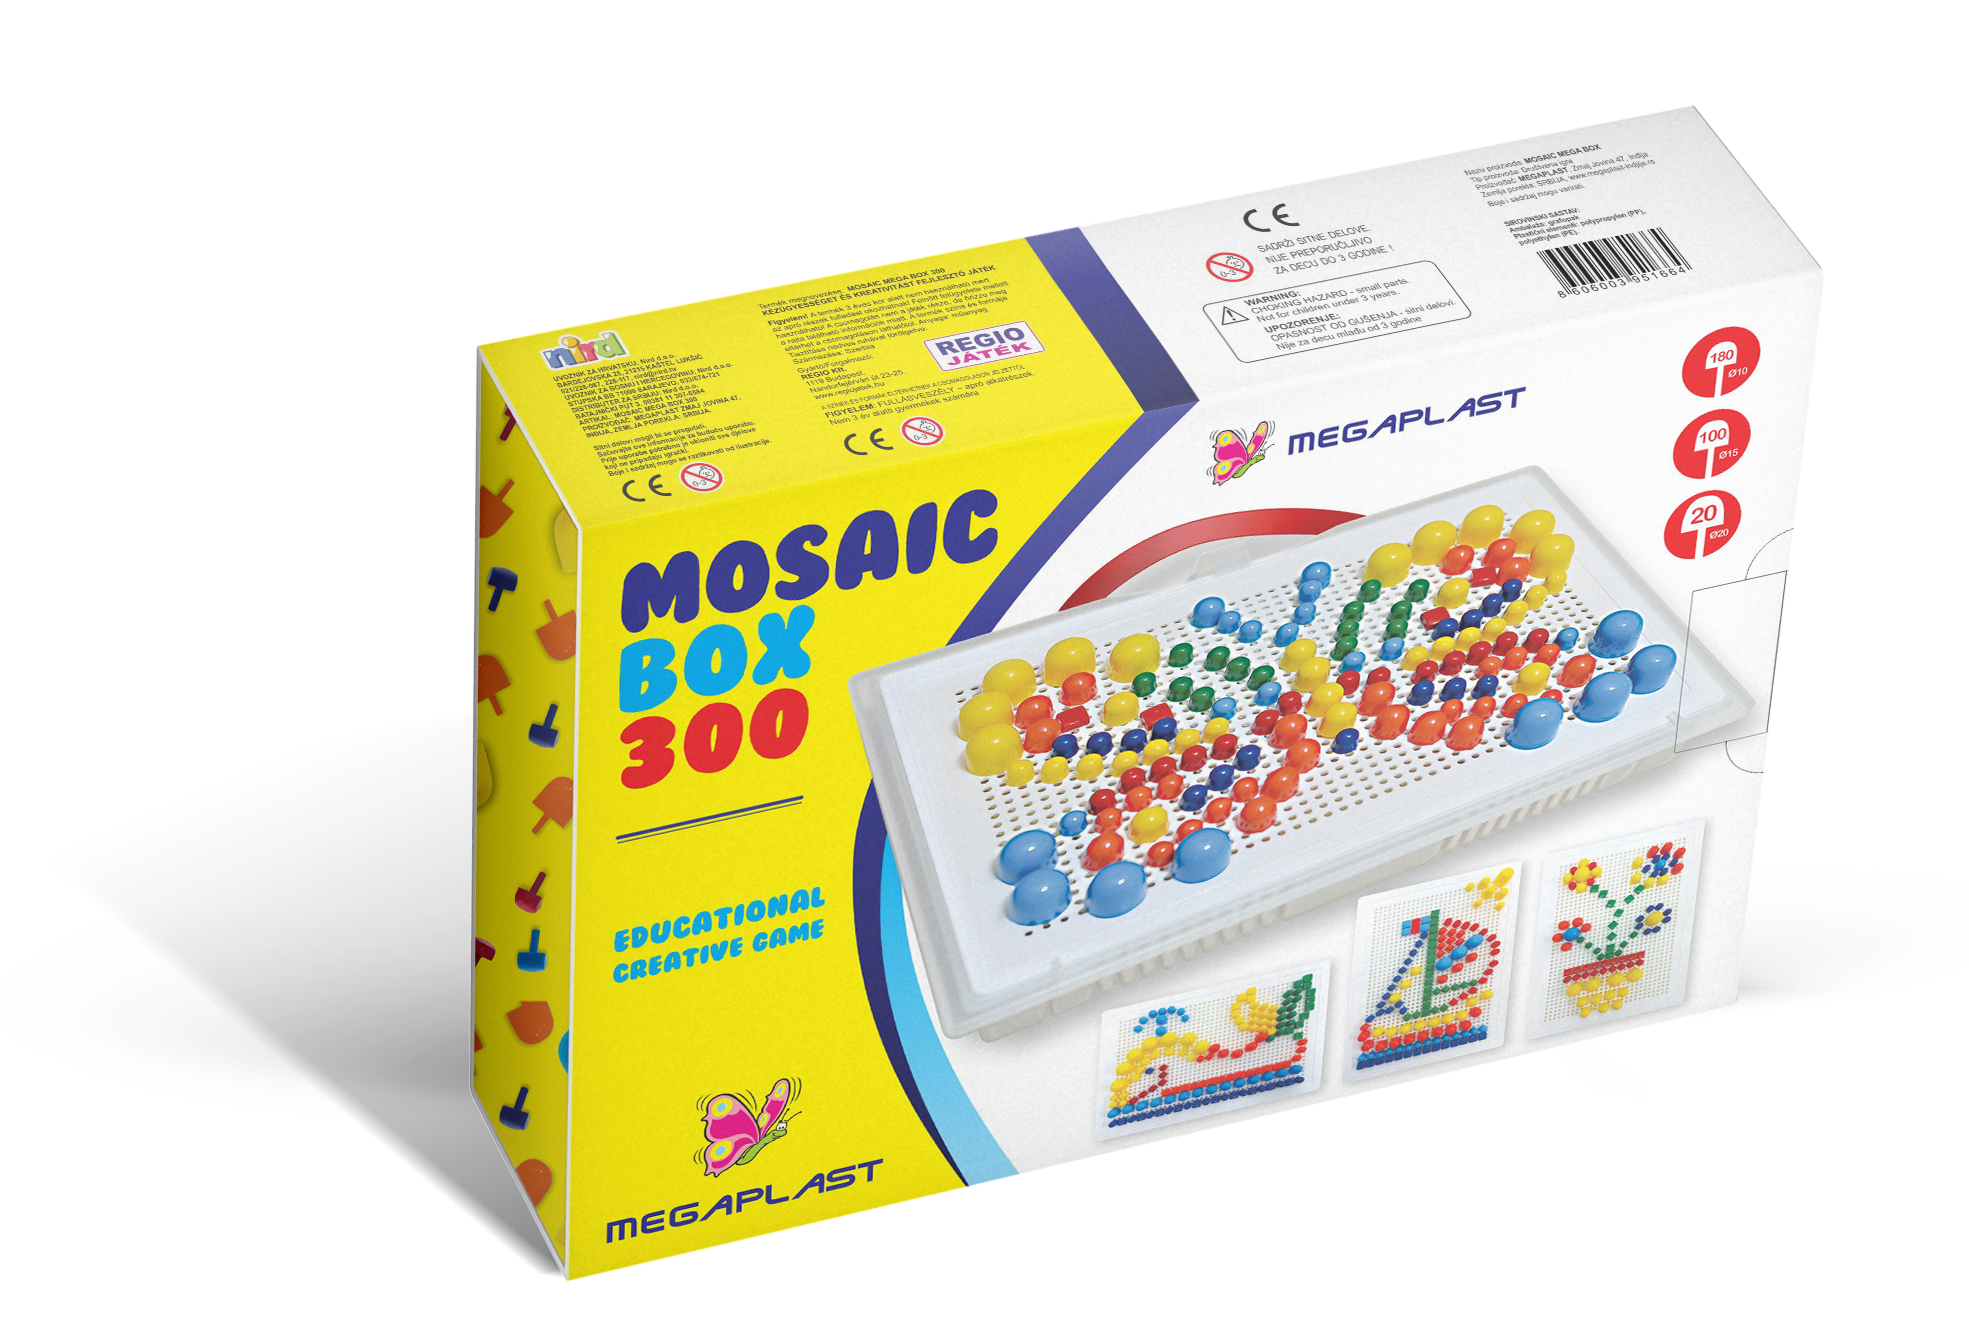 Mosaic box_300